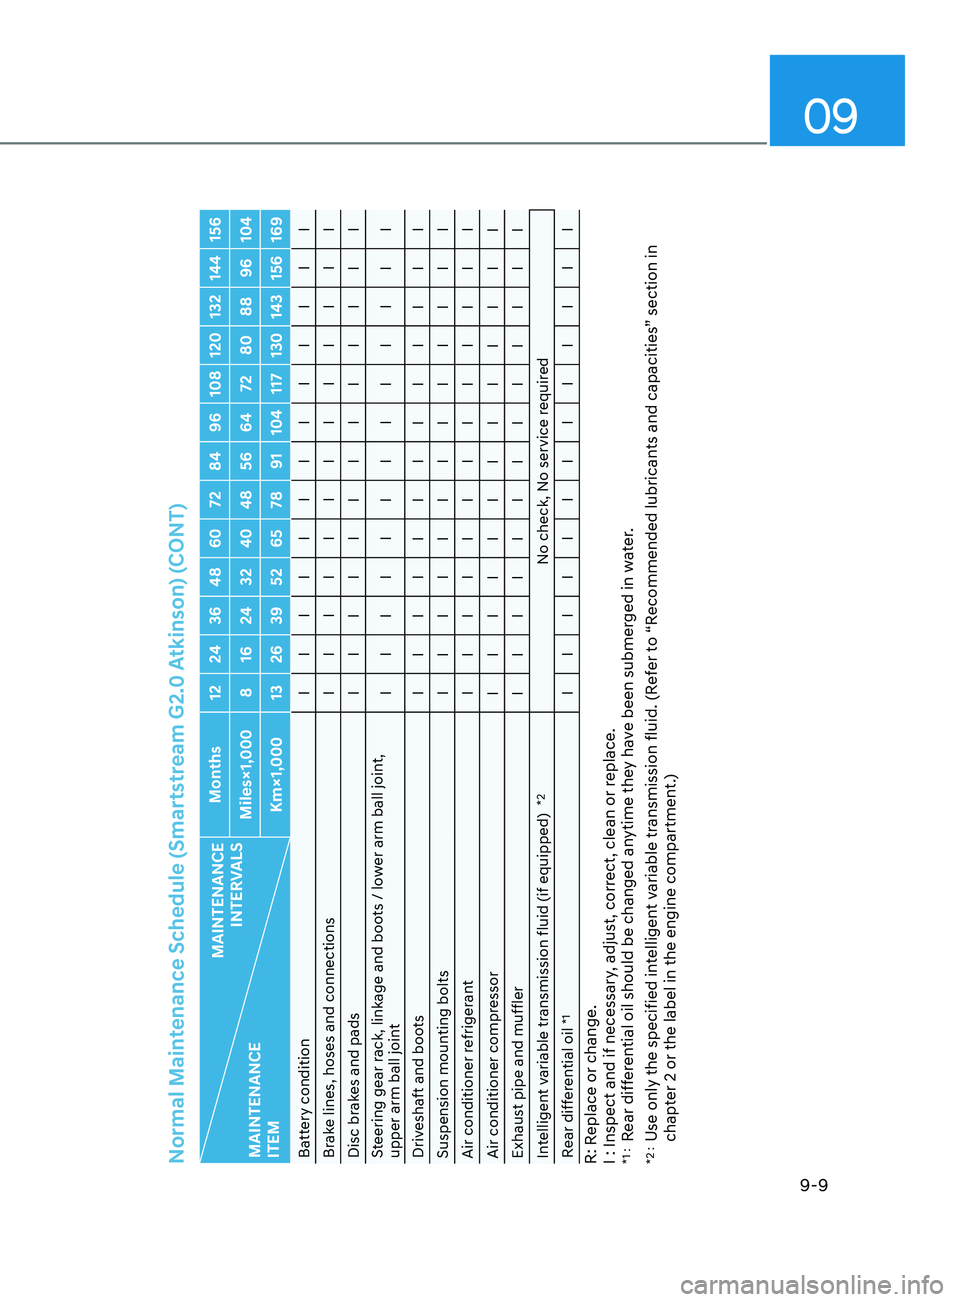 HYUNDAI ELANTRA SEL 2021  Owners Manual 09
9-9
Normal Maintenance Schedule (Smartstream G2.0 Atkinson) (CONT)
MAINTENANCE  INTERVALS
MAINTENANCE  
ITEM Months 12 24 36 48 60 72 84 96 108 120 132 144 156
Miles×1,000 8 16 24 32 40 48 56 64 7